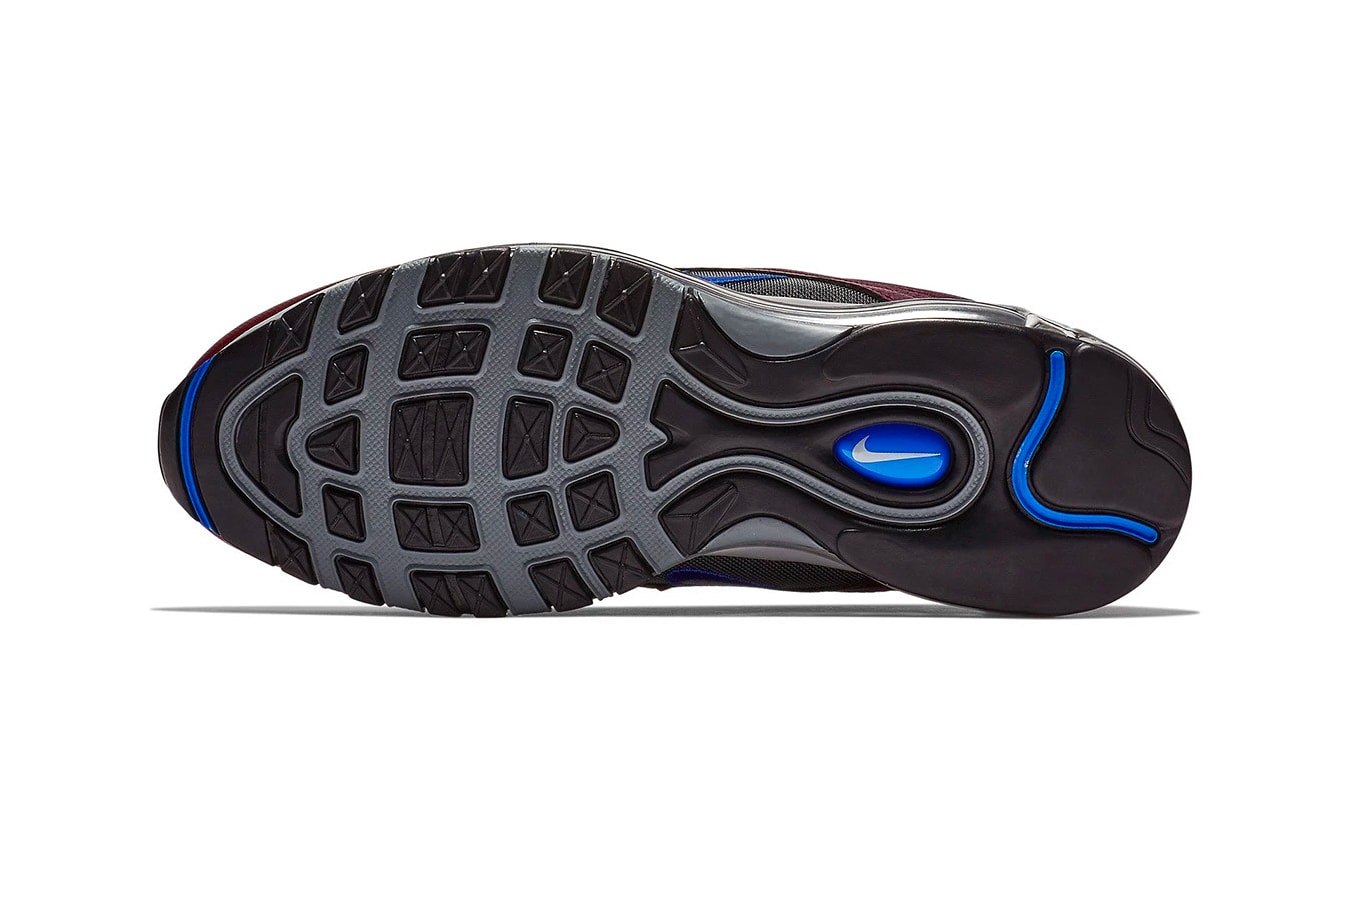 Nike Air Max 97 "Maroon/Blue" Release sneaker colorway date purchase online price